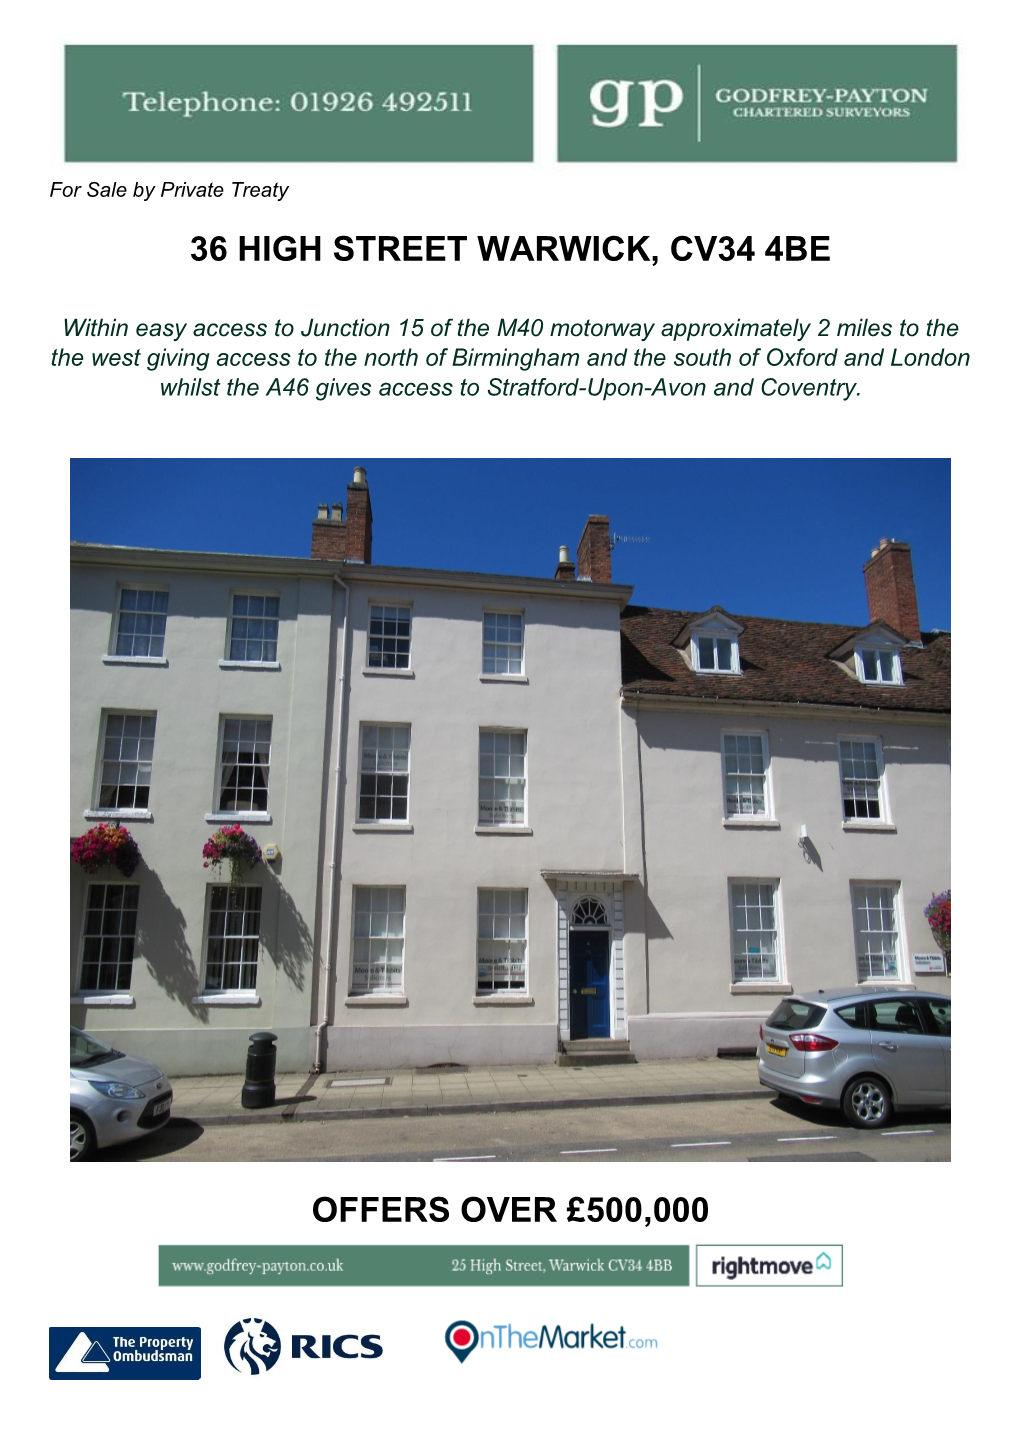 36 High Street Warwick, Cv34 4Be Offers Over £500,000